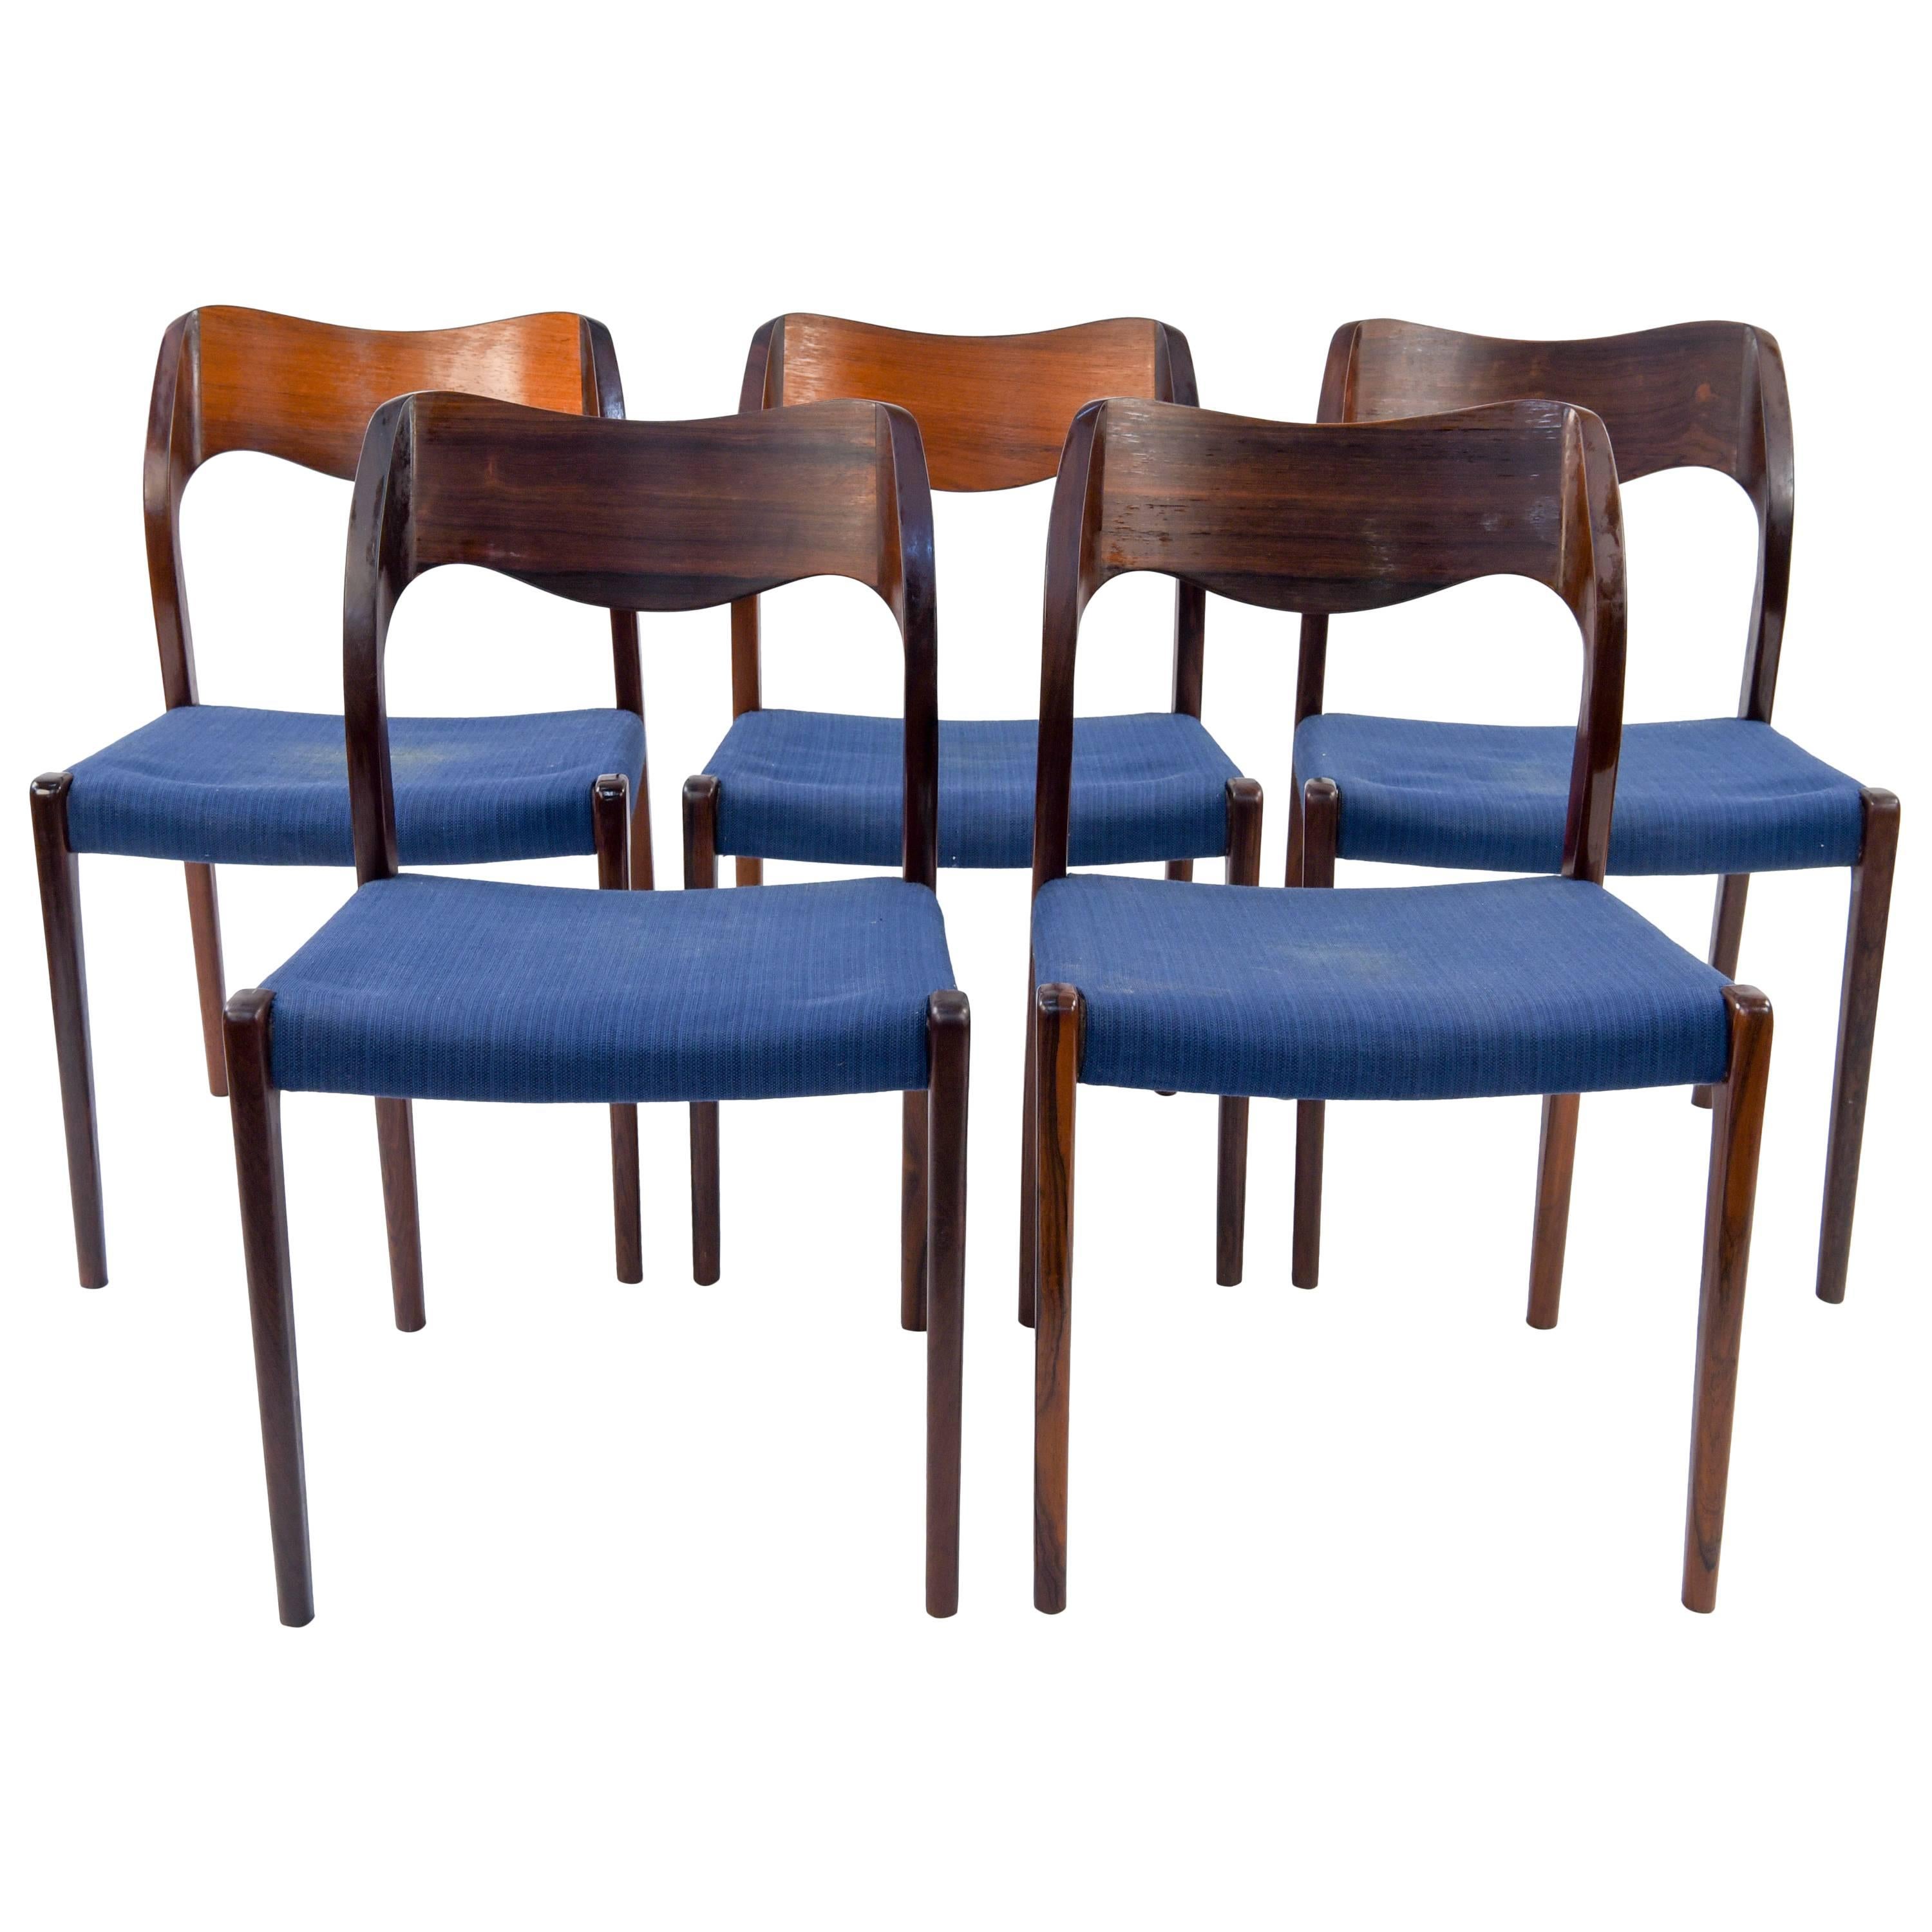 Set of Five Jl Møller Model No. 71. Dining Chairs by Arne Hovmand Olsen